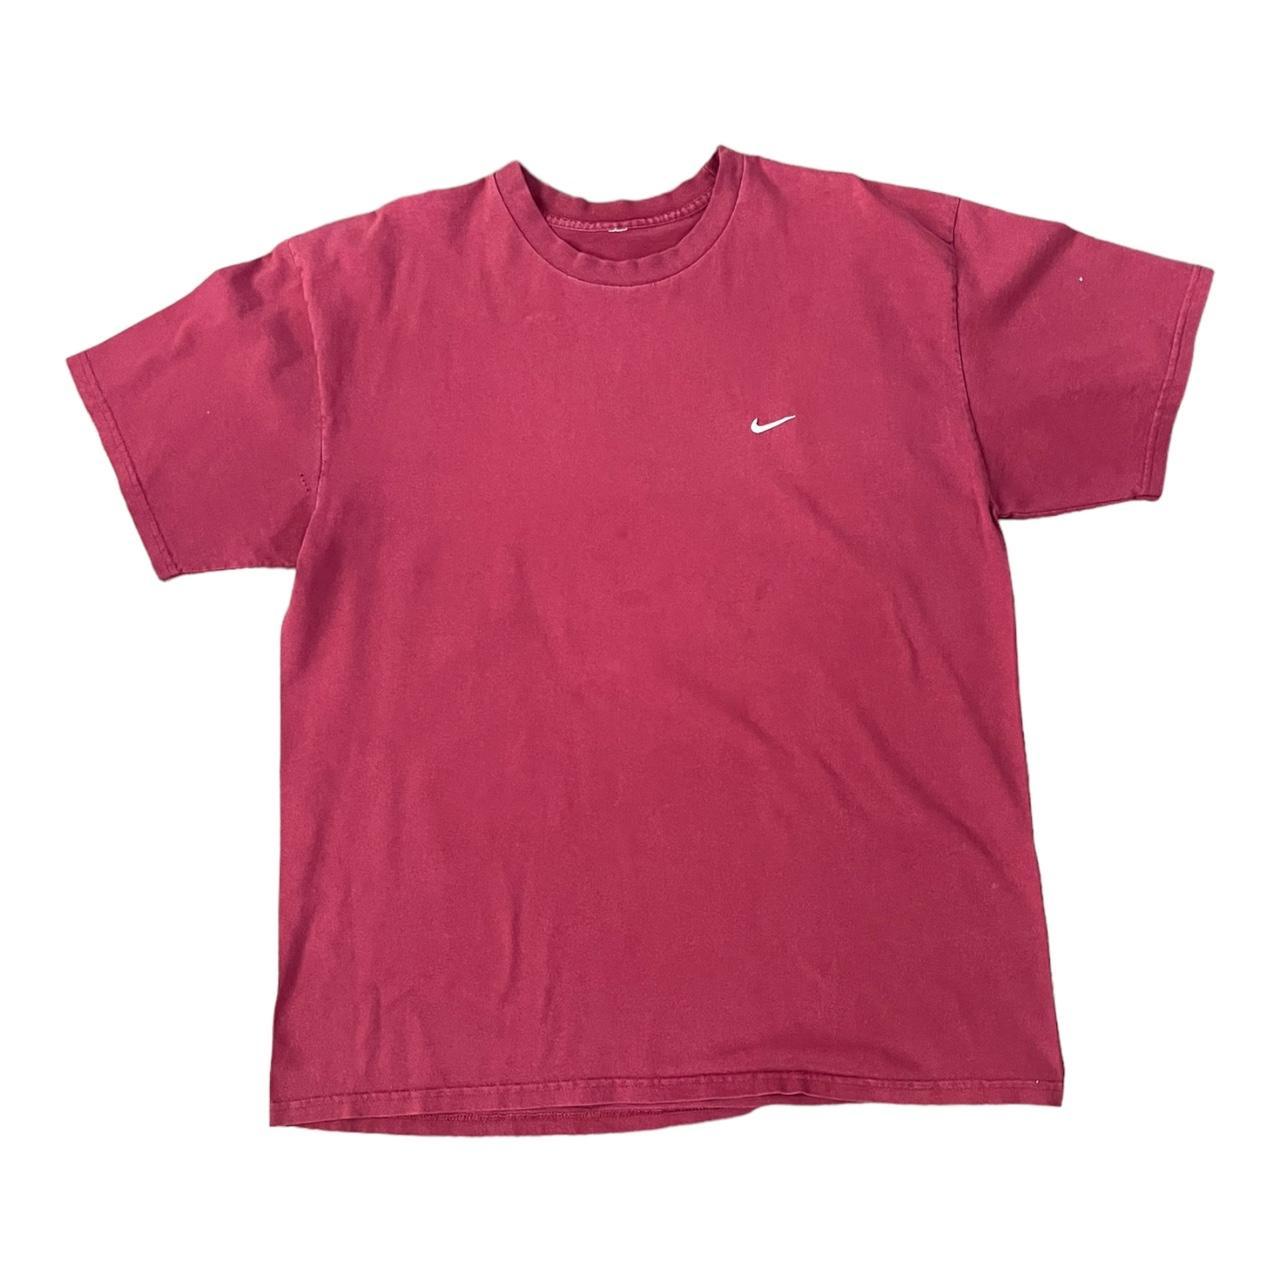 Nike Men's Shirt - Burgundy - XL